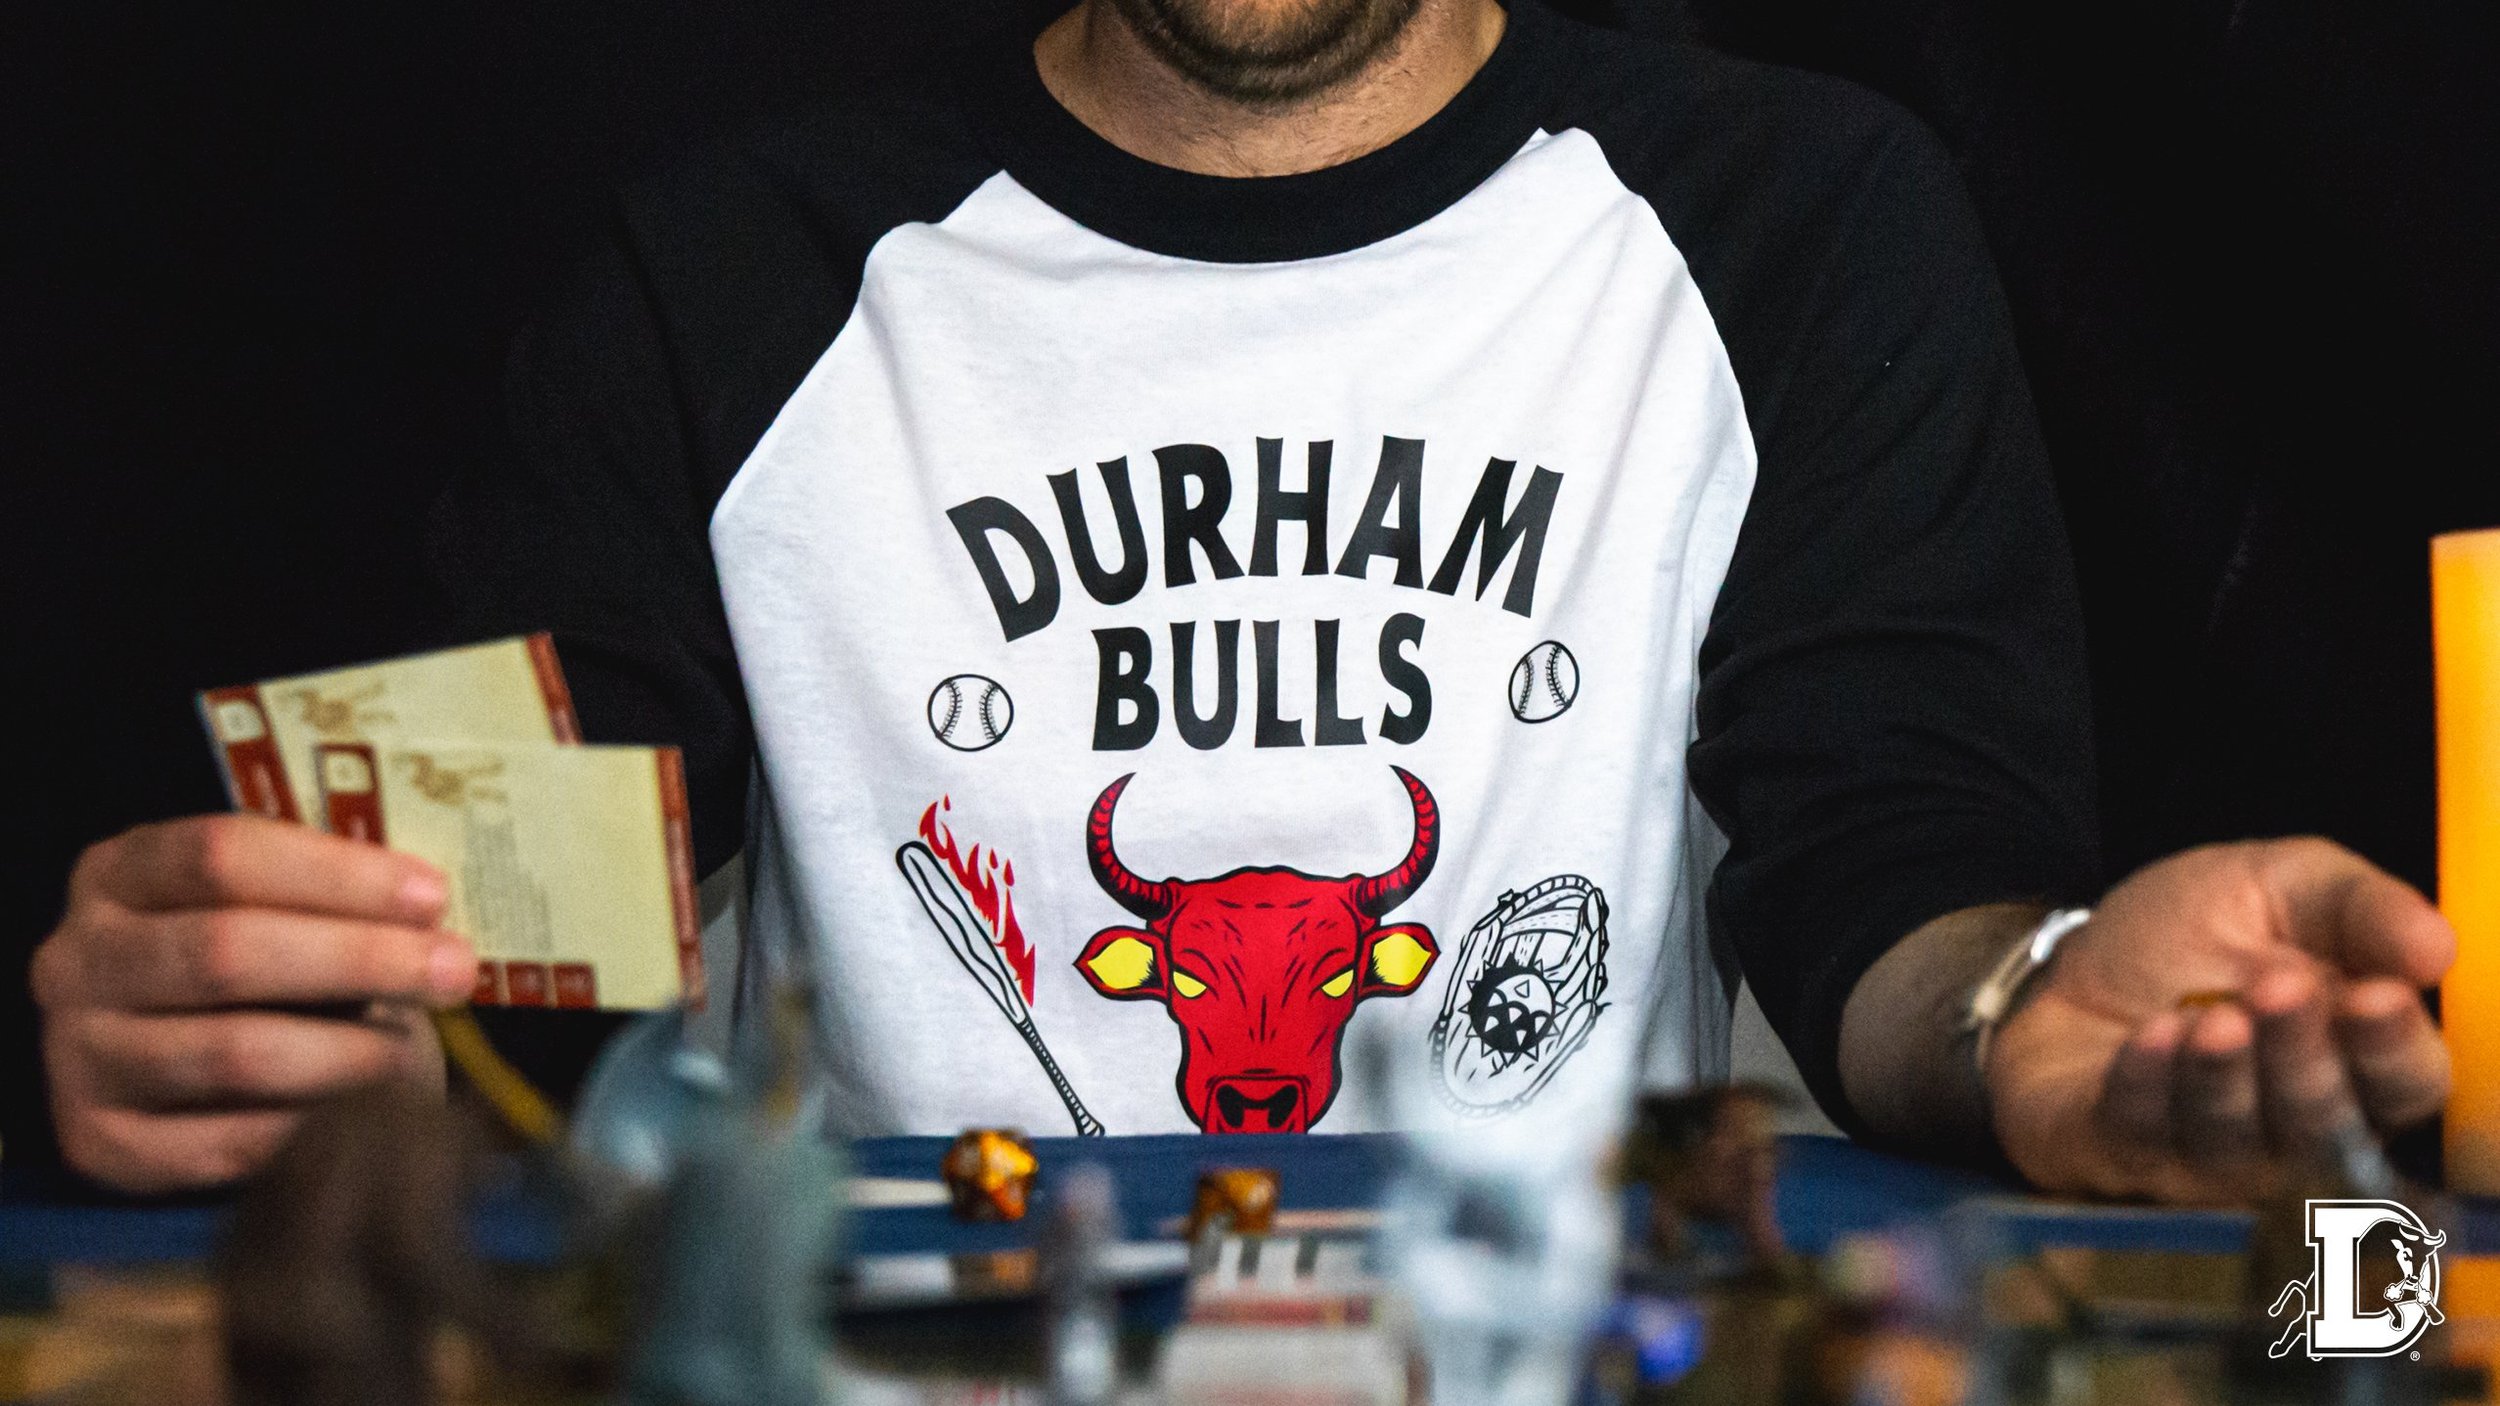 Durham Bulls on X: Now presenting the #DurhamBulls new uniforms